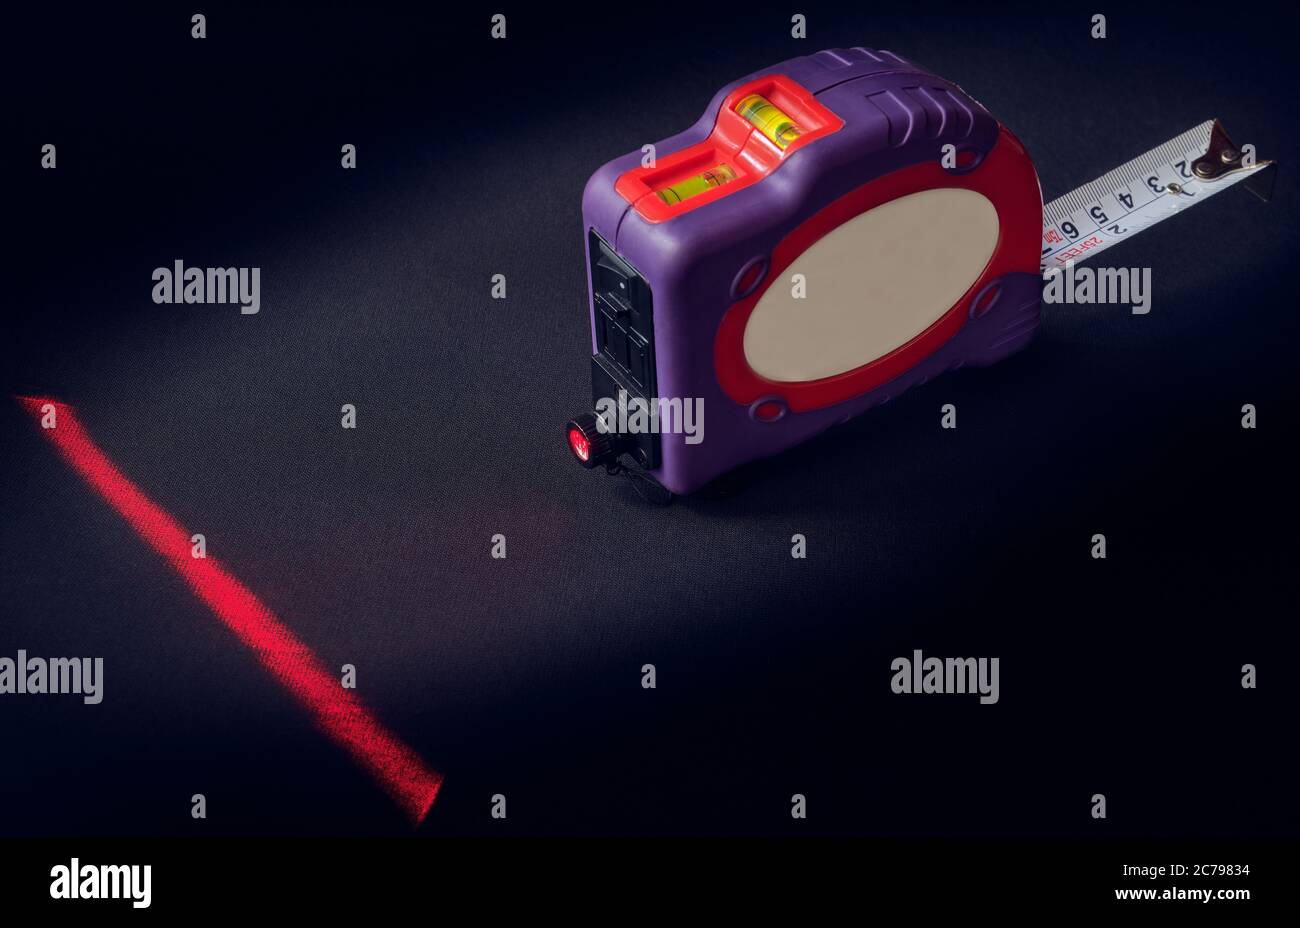 Cinta métrica láser fotografías e imágenes de alta resolución - Alamy